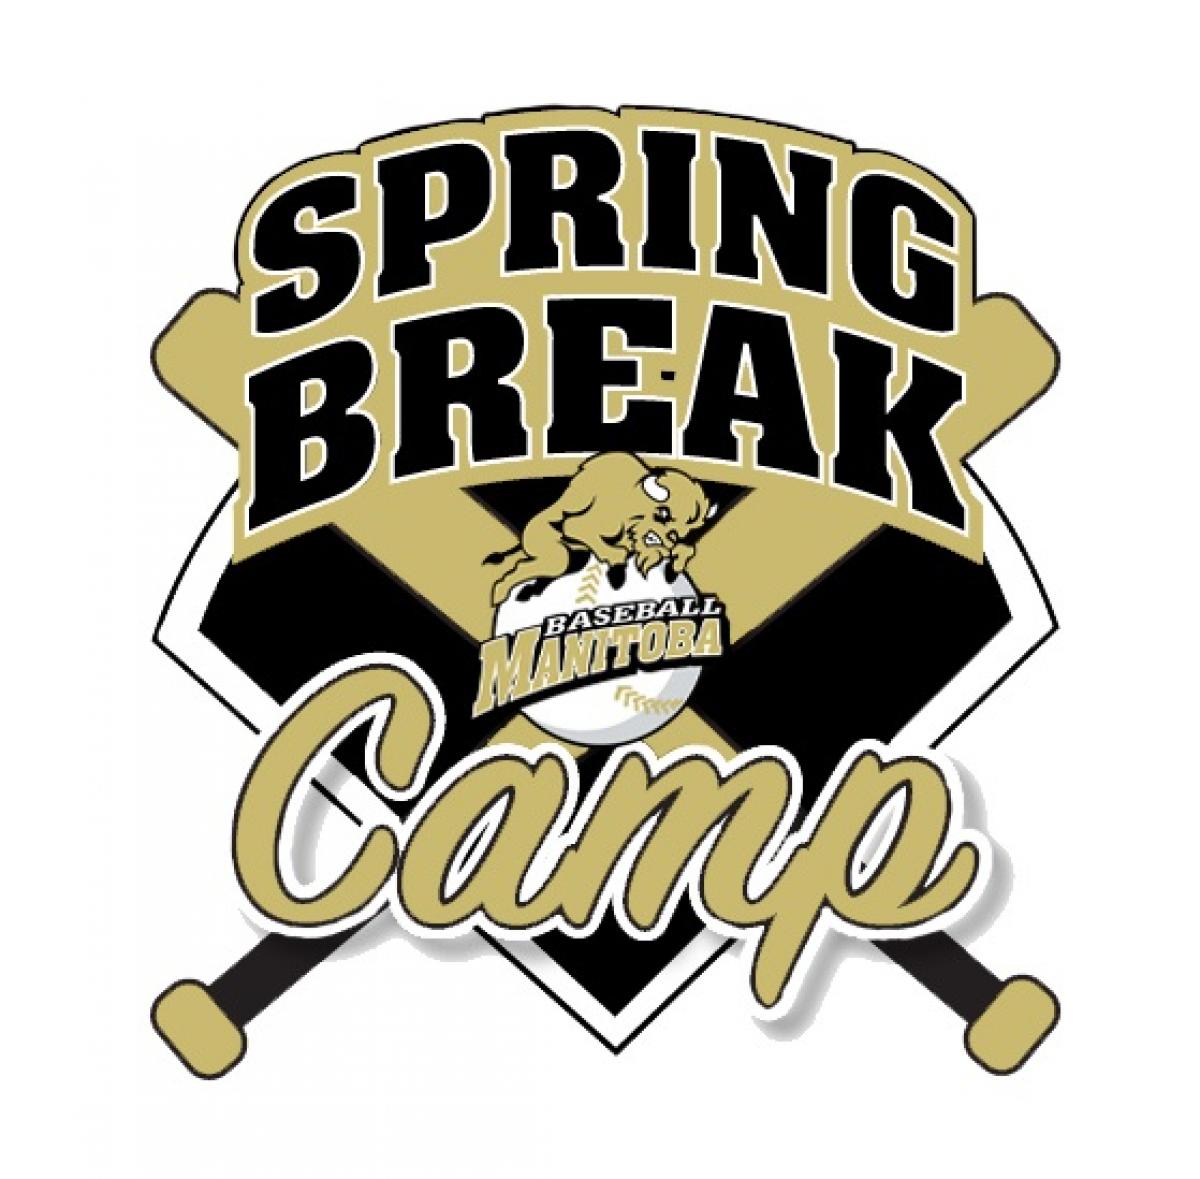 Baseball MB annual Spring Break Baseball Camps